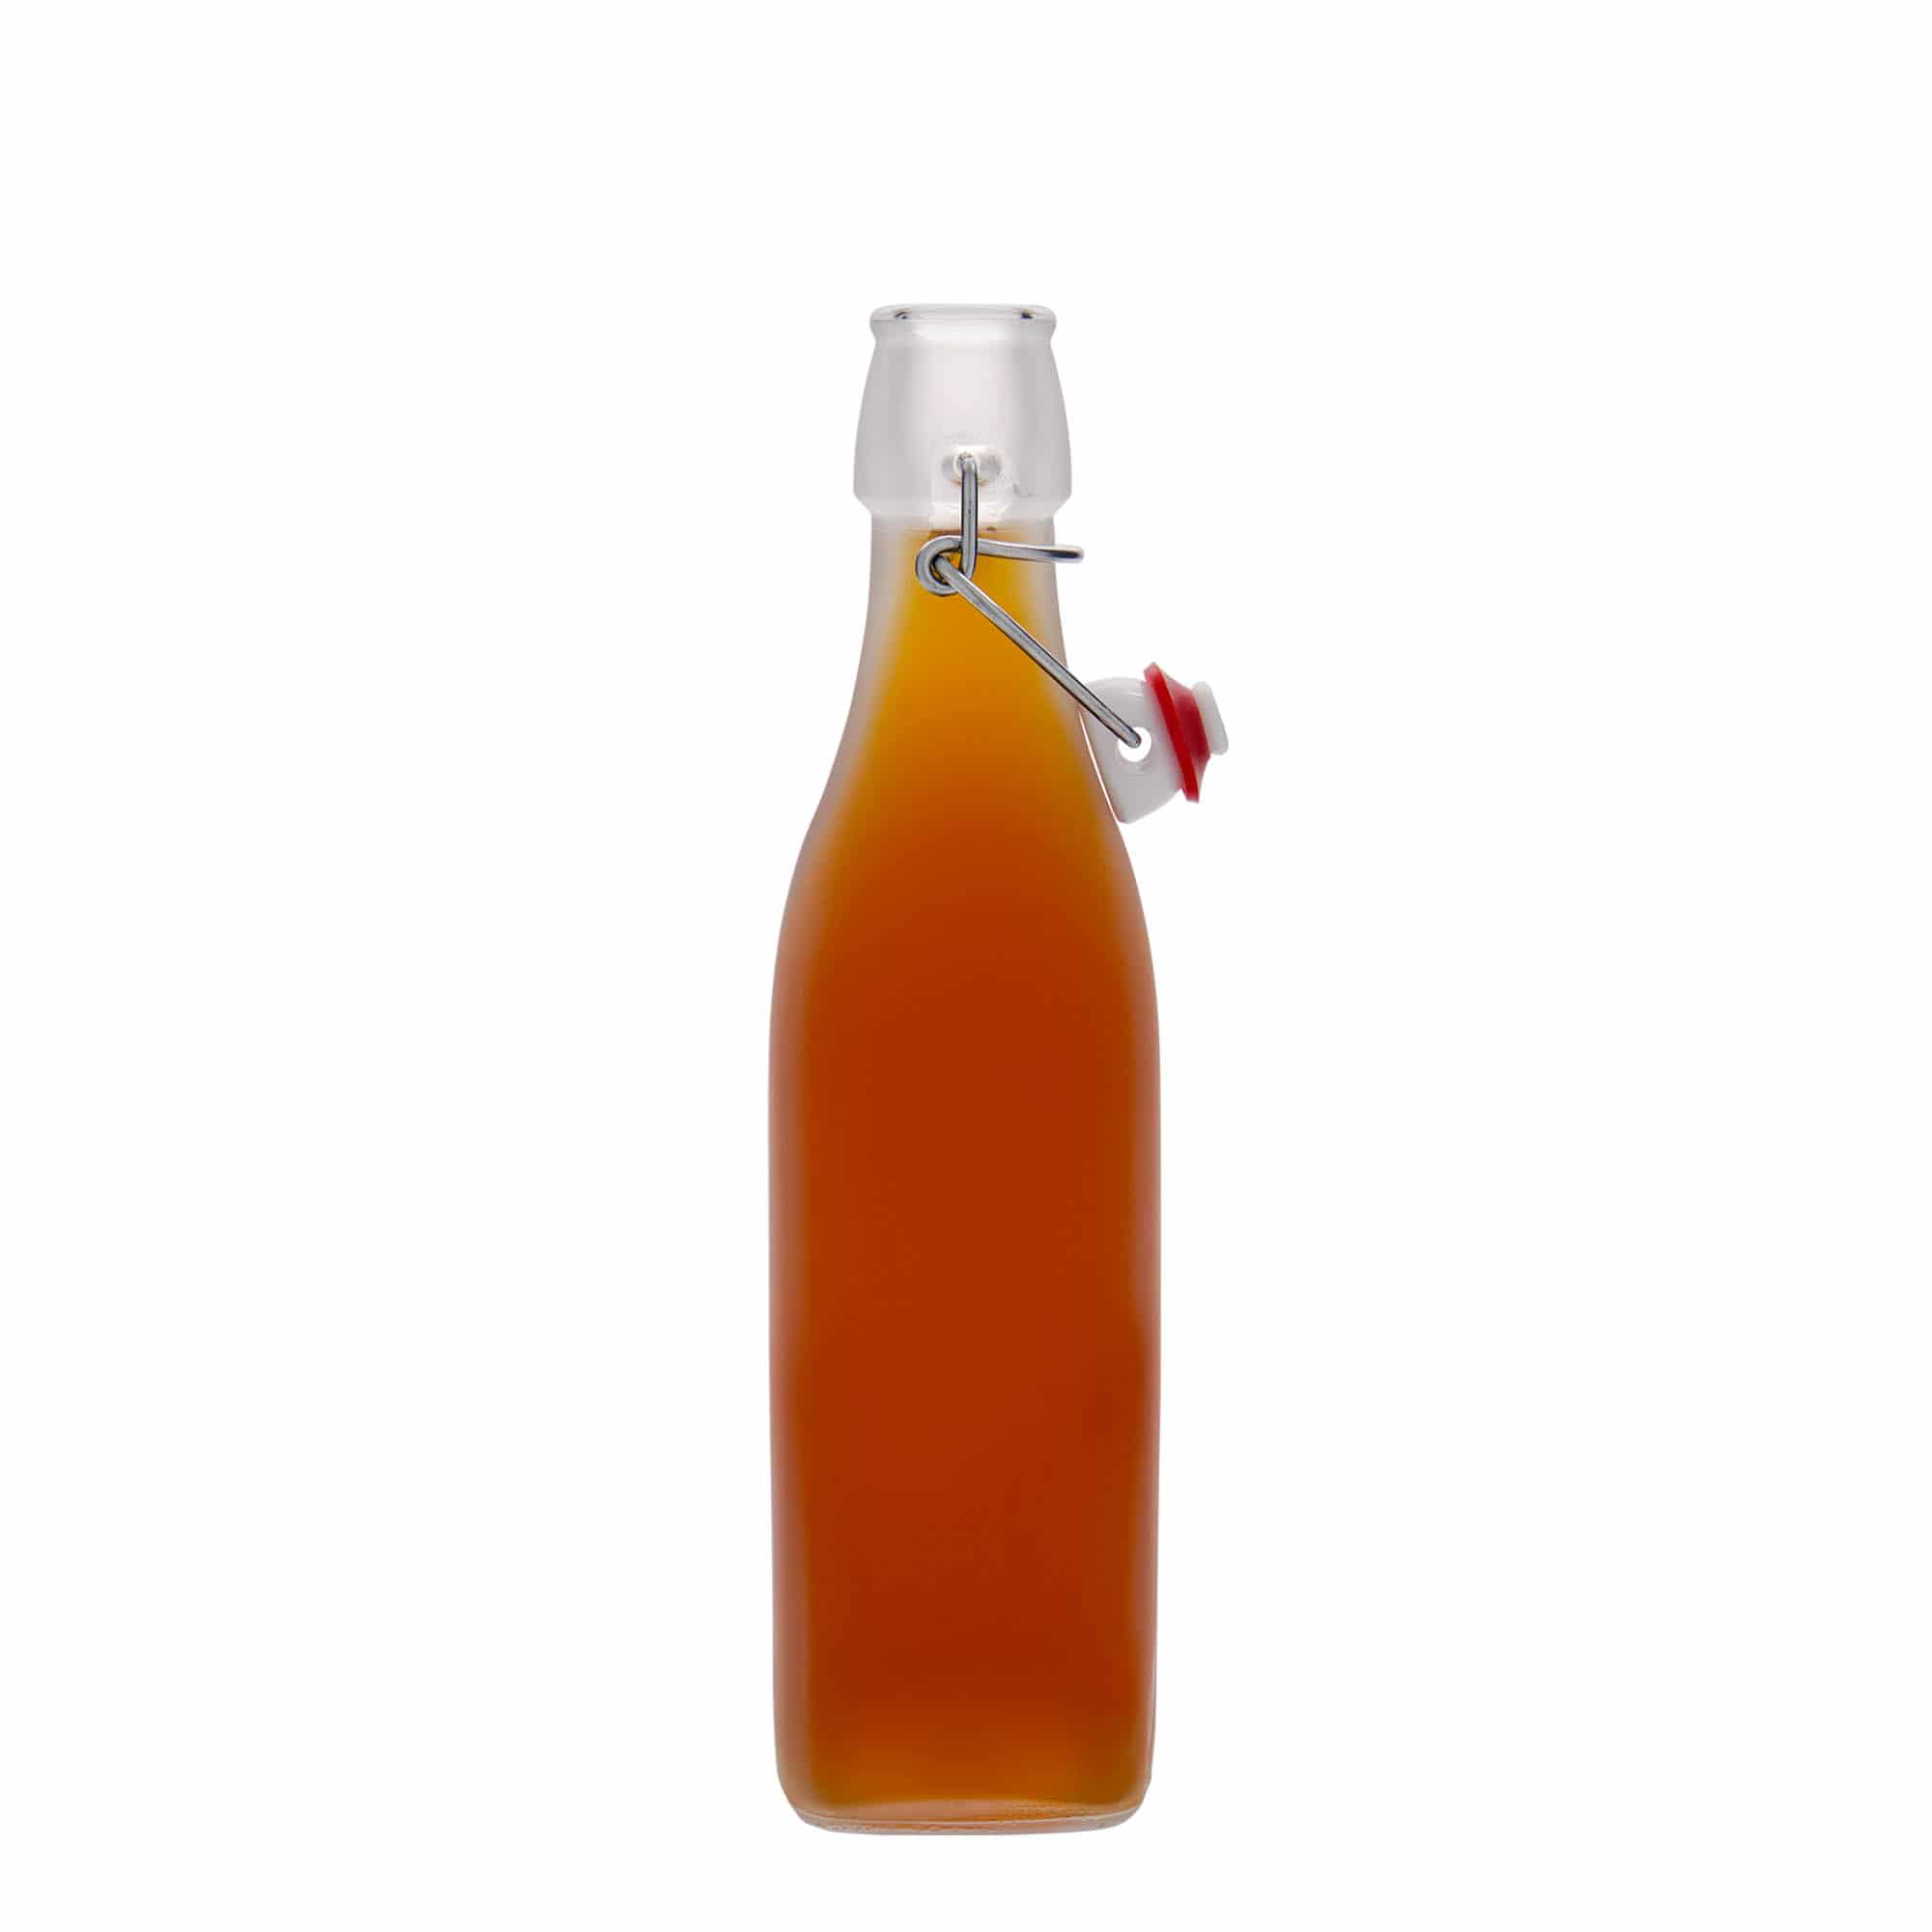 Botella de vidrio 'Swing' de 500 ml, cuadrada, blanco, boca: tapón mecánico